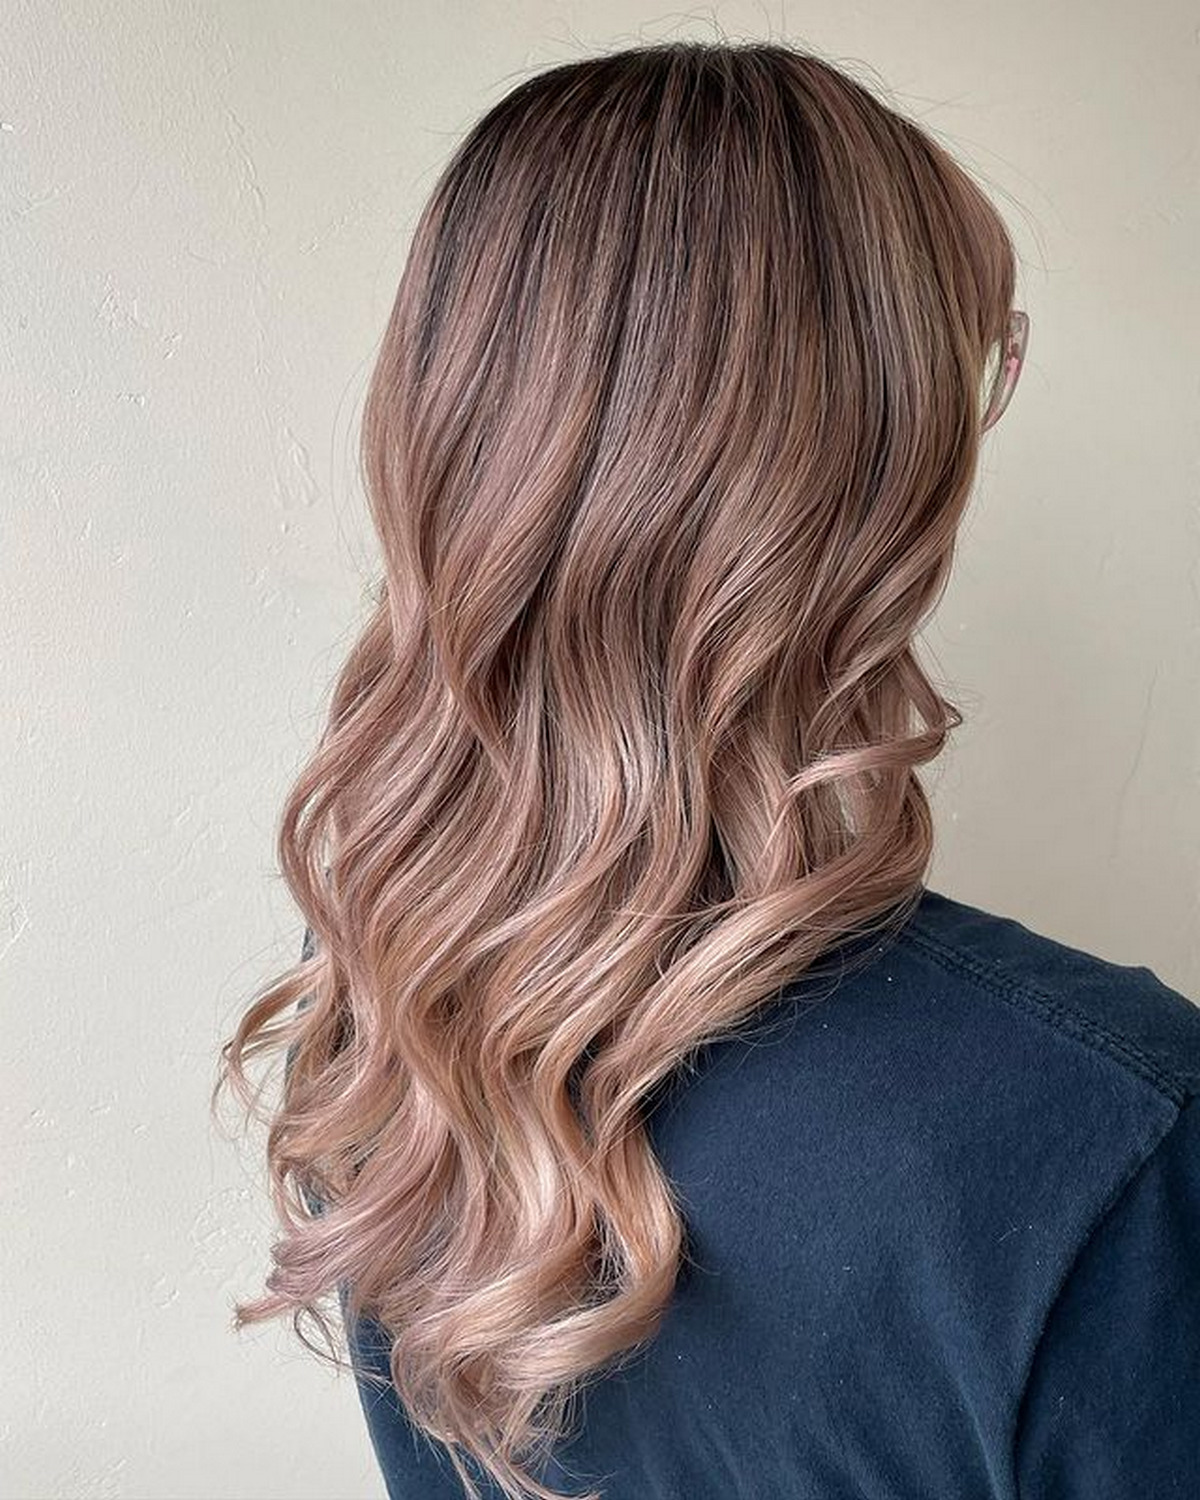 Rosegold Hair With Waves For Medium-Length Hair